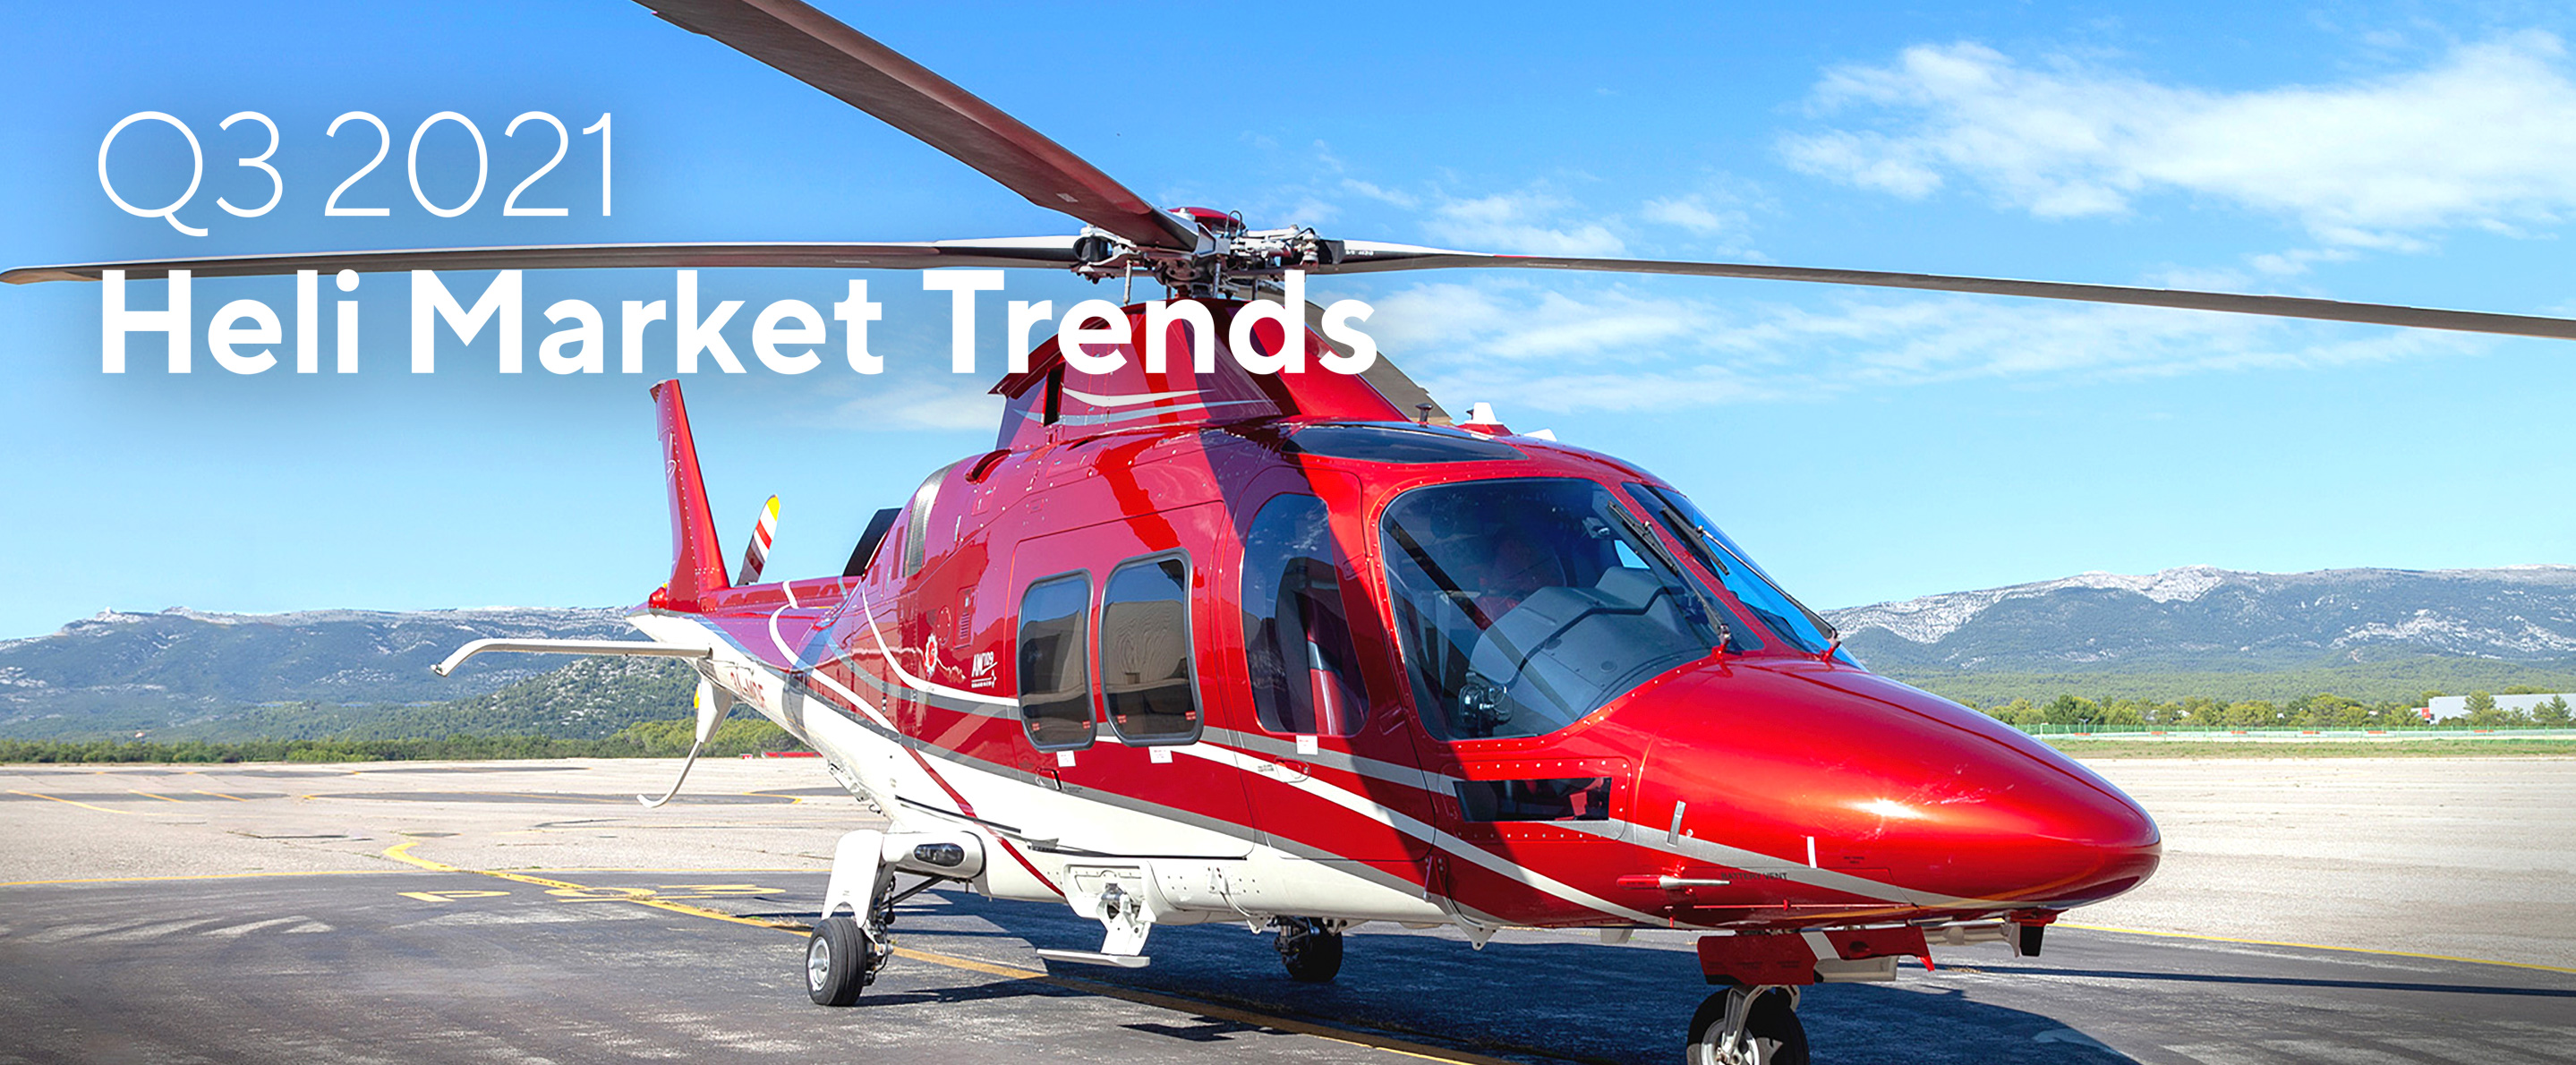 Aero Asset Heli Market Trends Reports Stable Sales Volume, Shrinking Supply